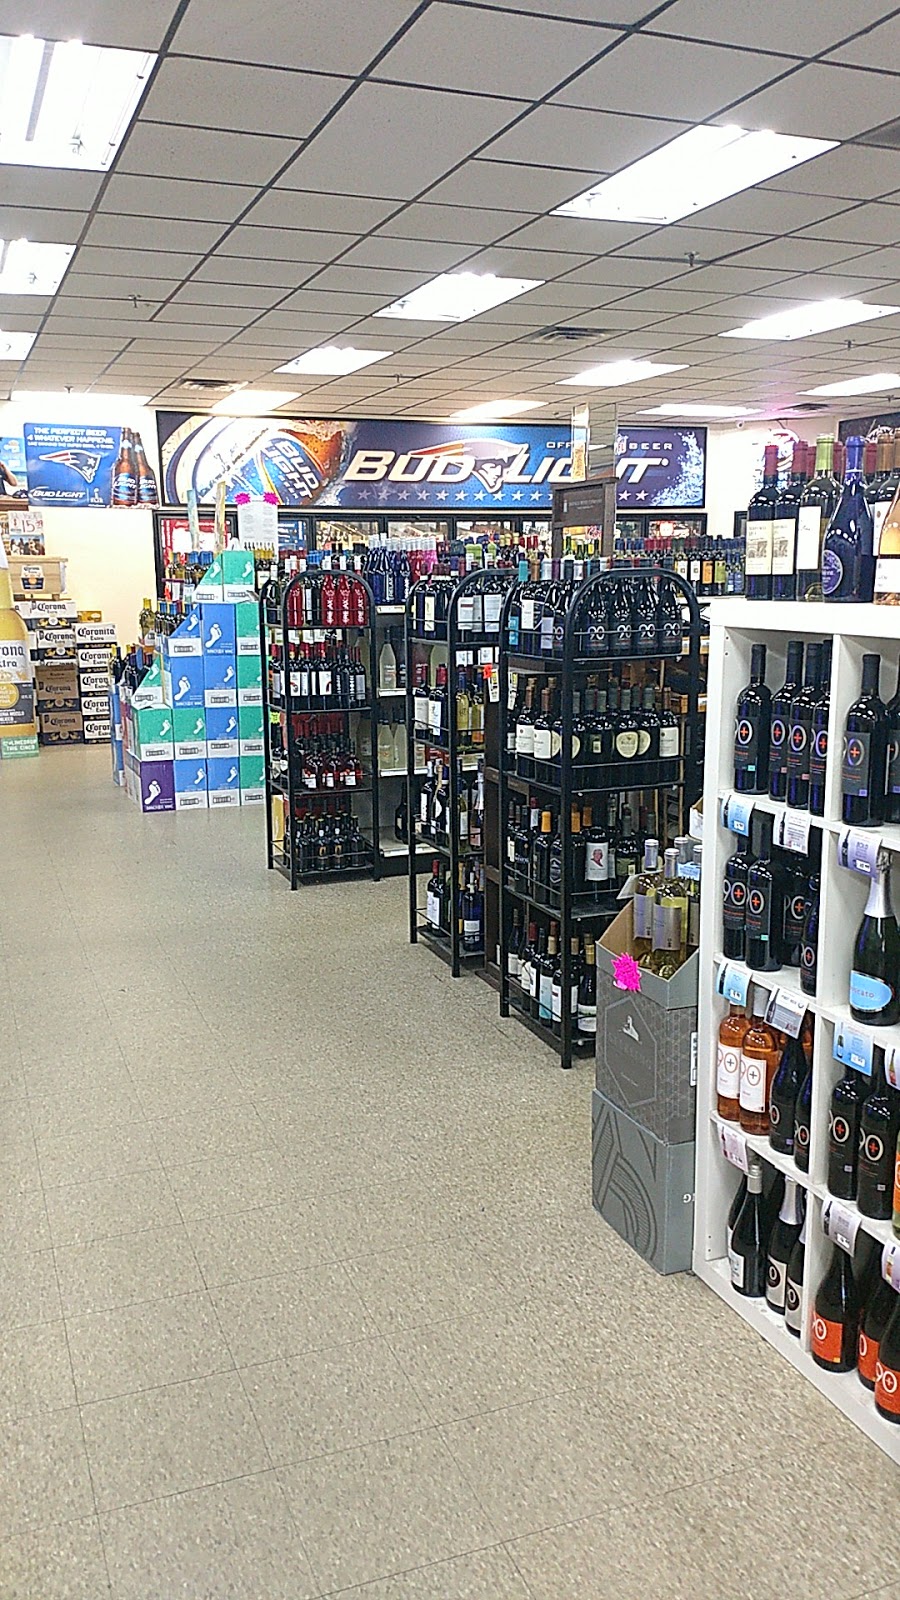 Taunton Wine & Liquors | 239 Broadway, Taunton, MA 02780, USA | Phone: (508) 823-6180